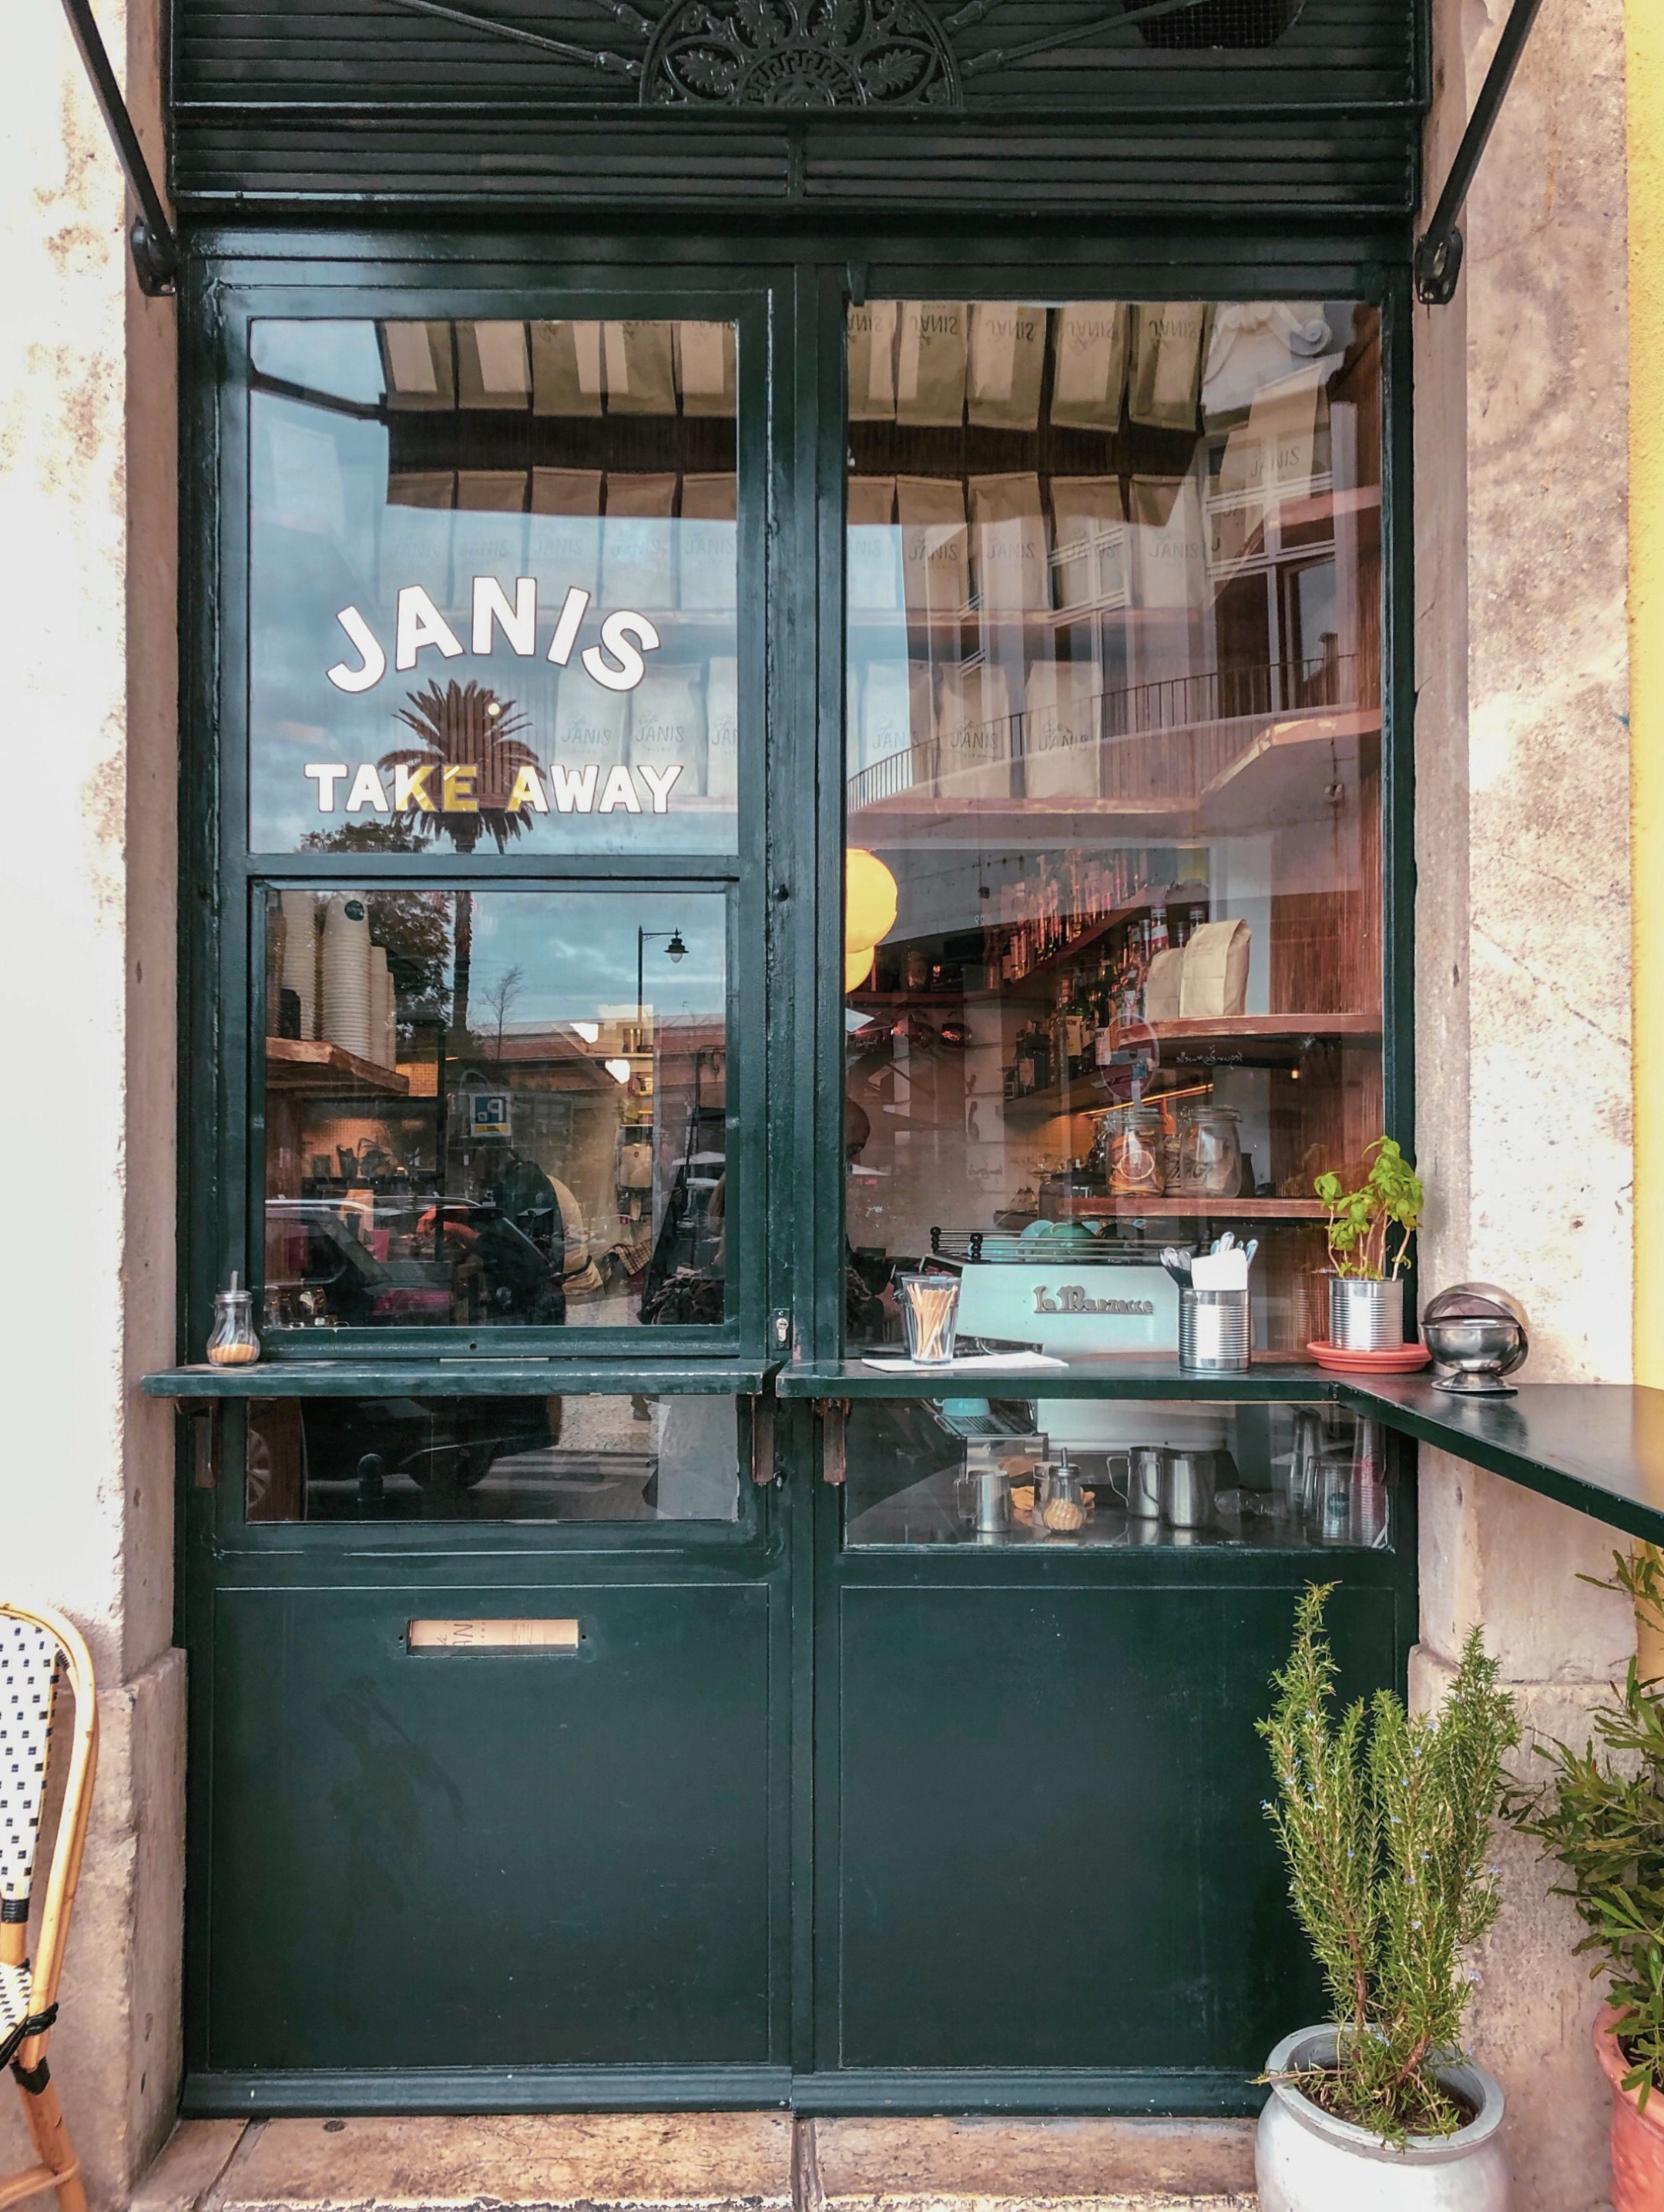 Take away Café Janis